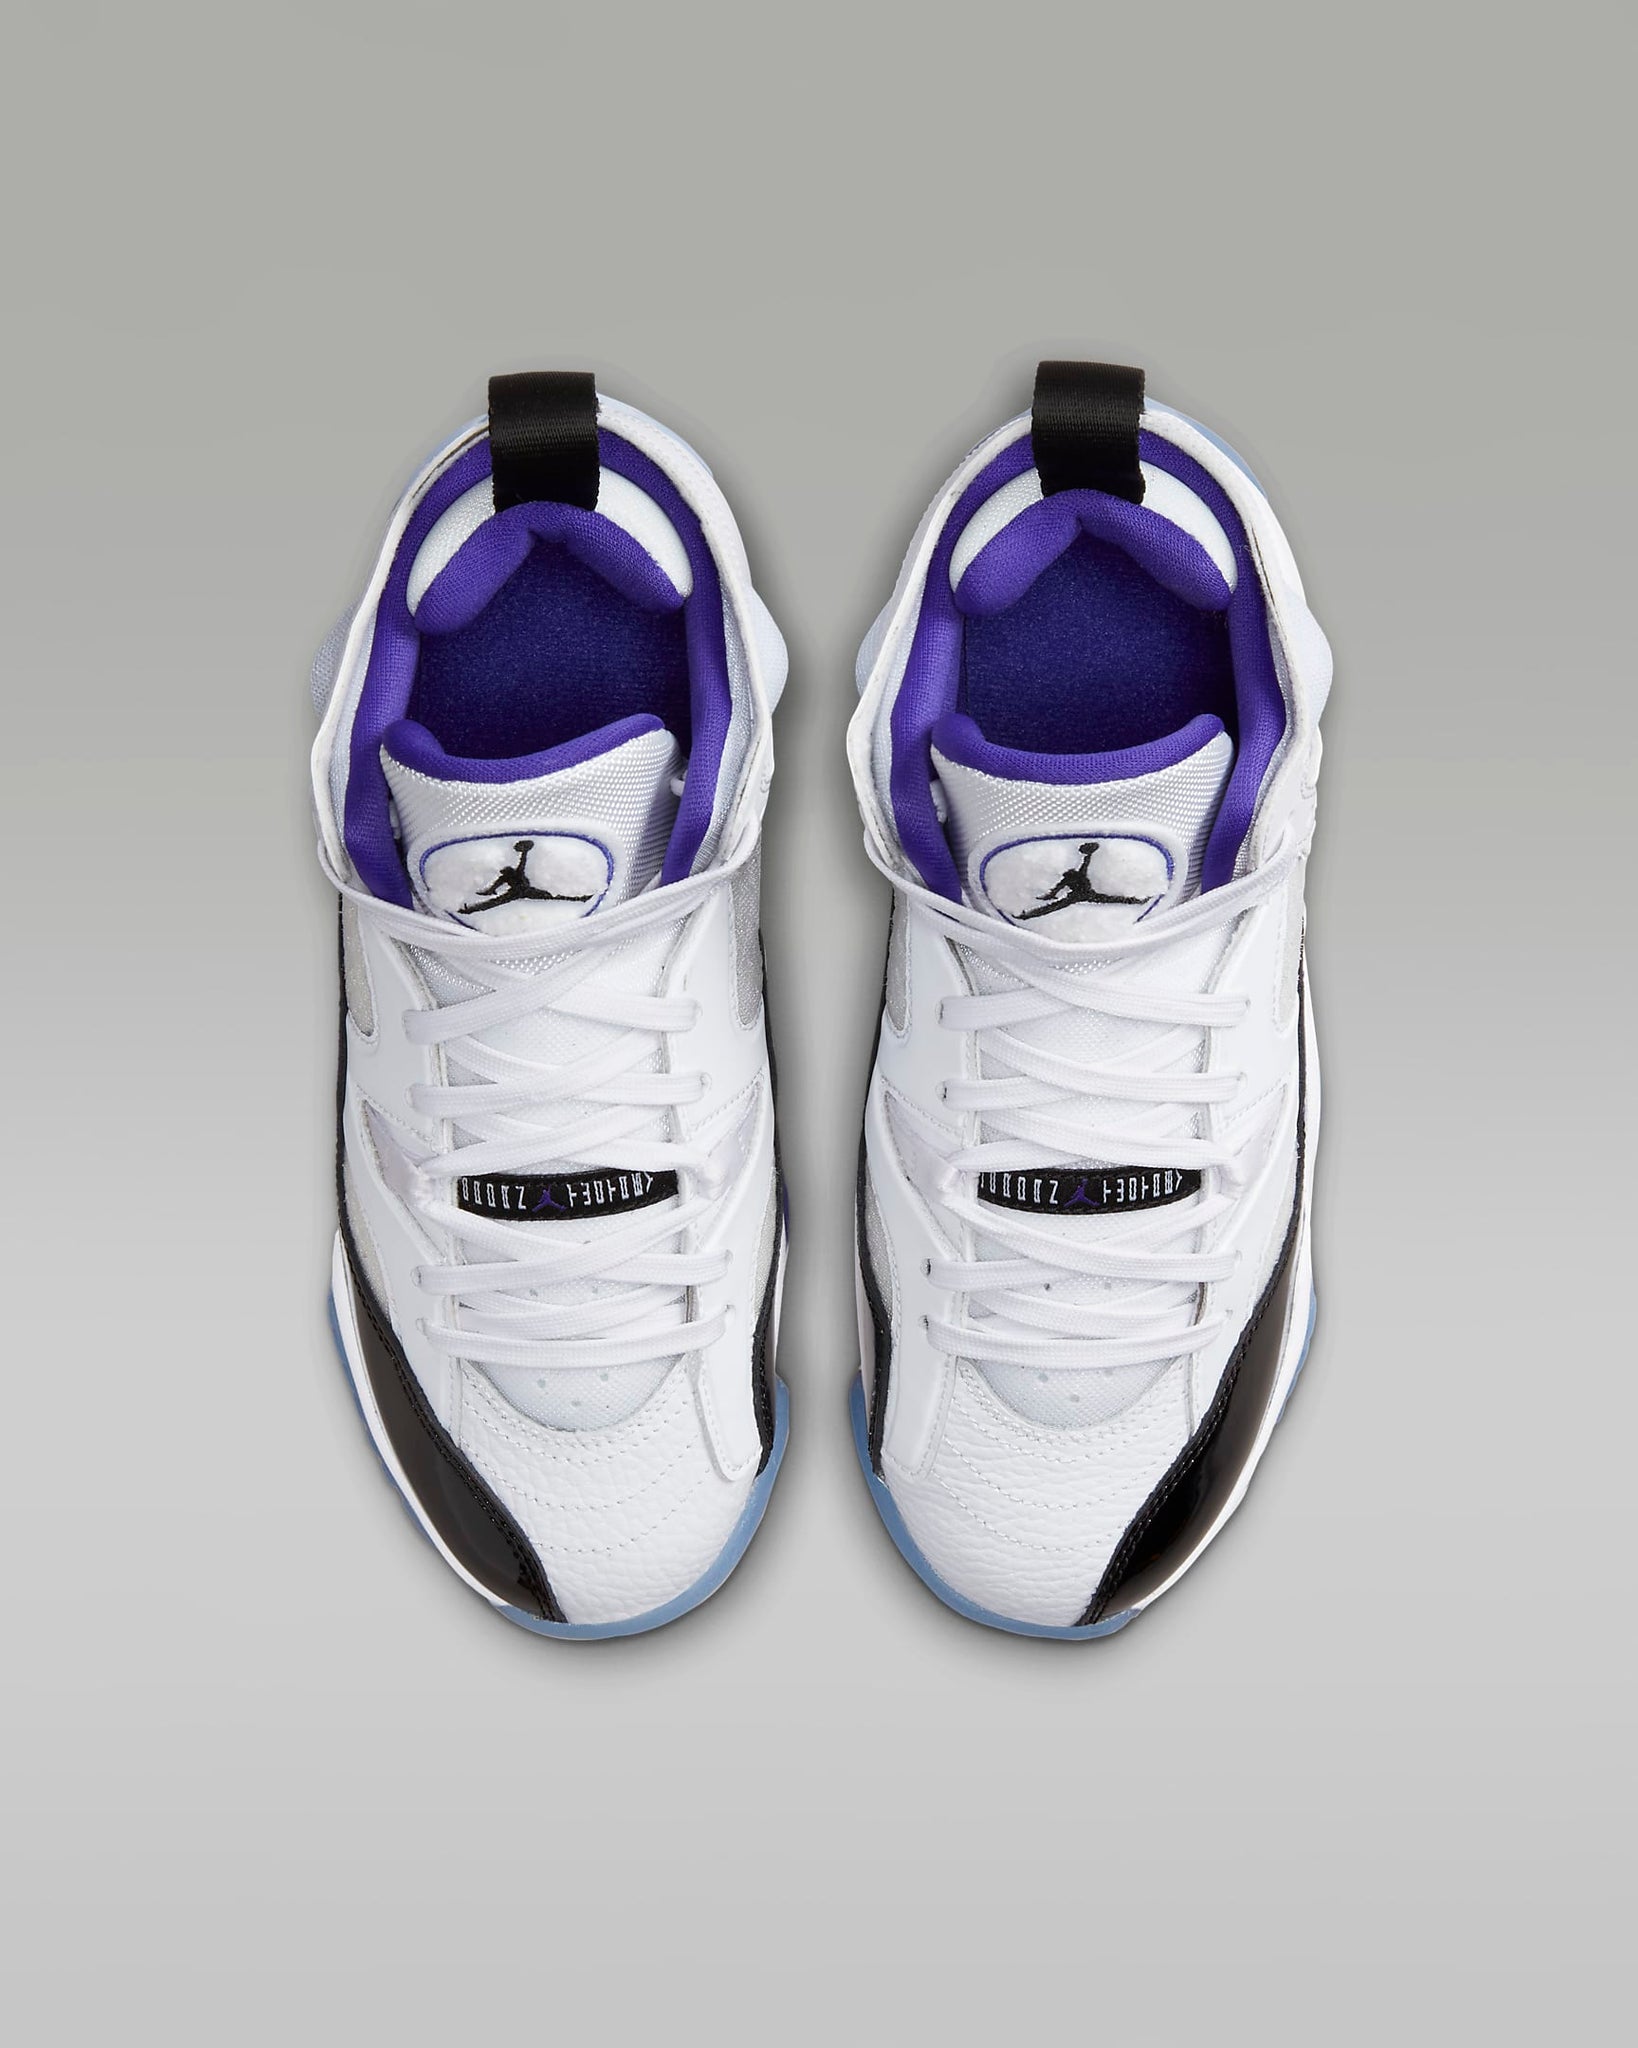 Jordan baskets "Jumpman Two trey" GS Junior White/black/purple